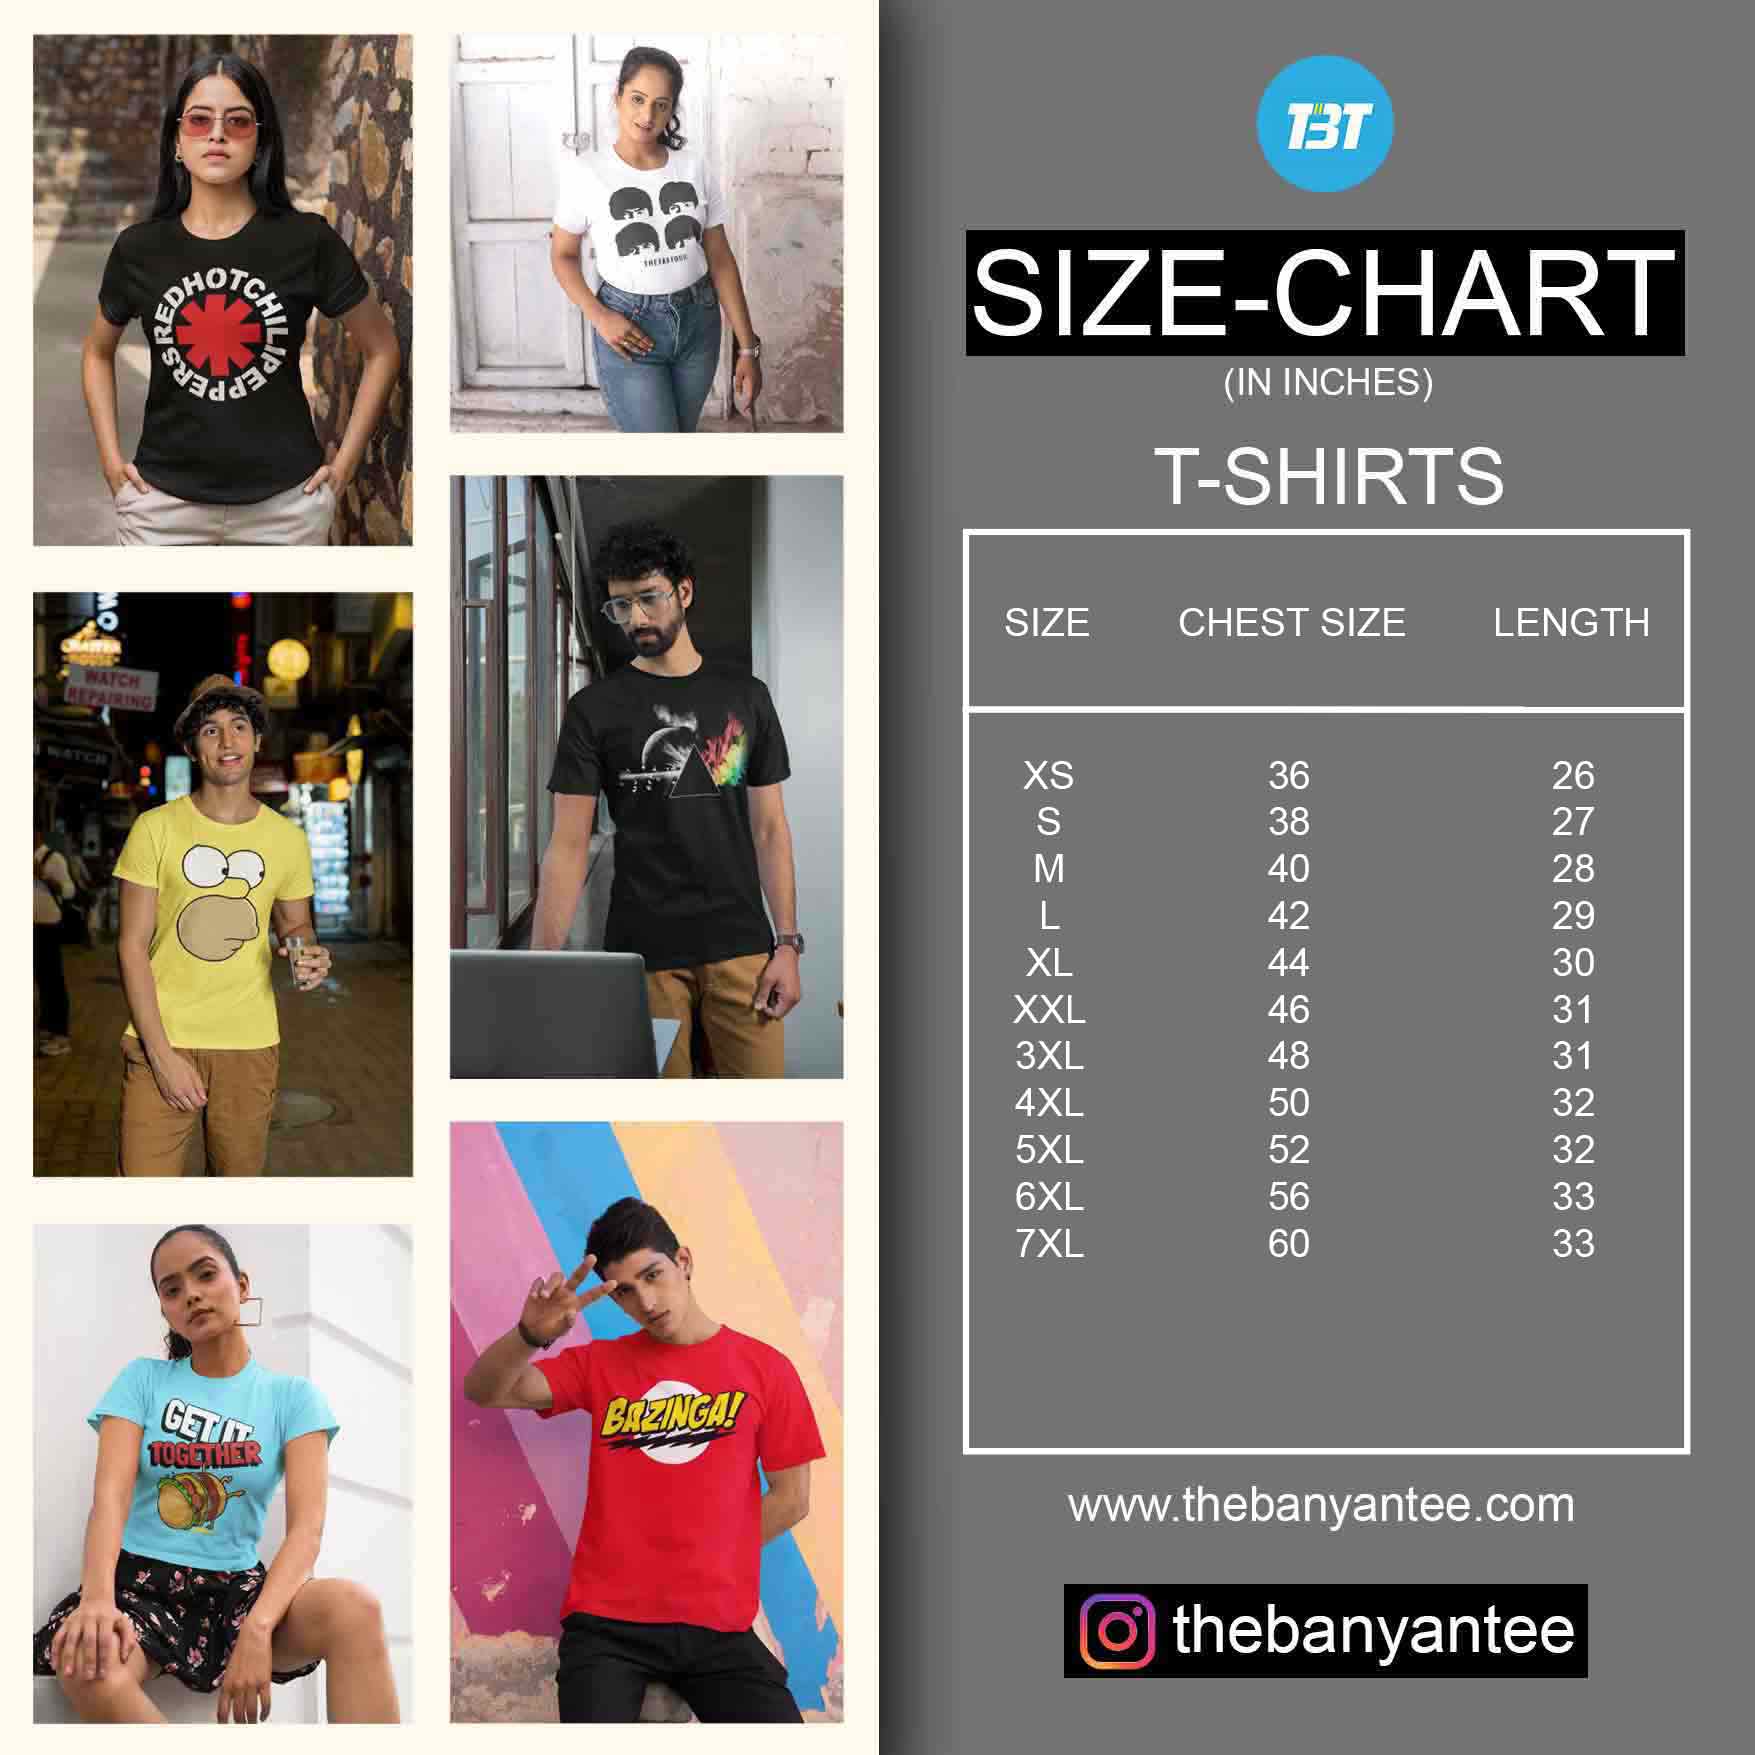 the banyan tee t-shirt size chart